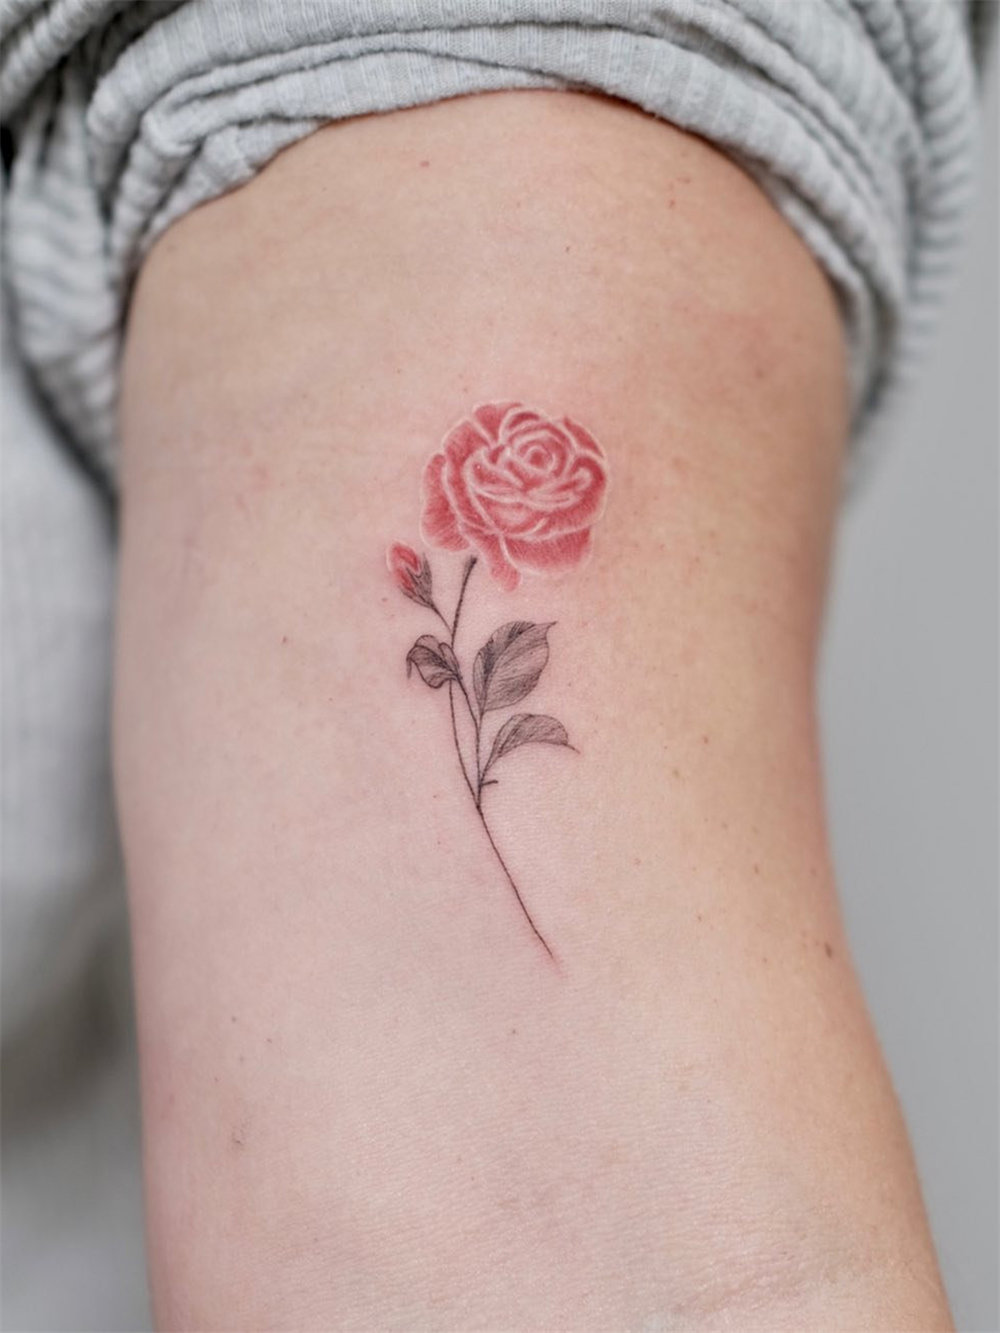 Rose Tattoo Ideas, Beautiful Rose Tattoos for Women, fineline rose tattoo ideas, simple rose tattoo designs